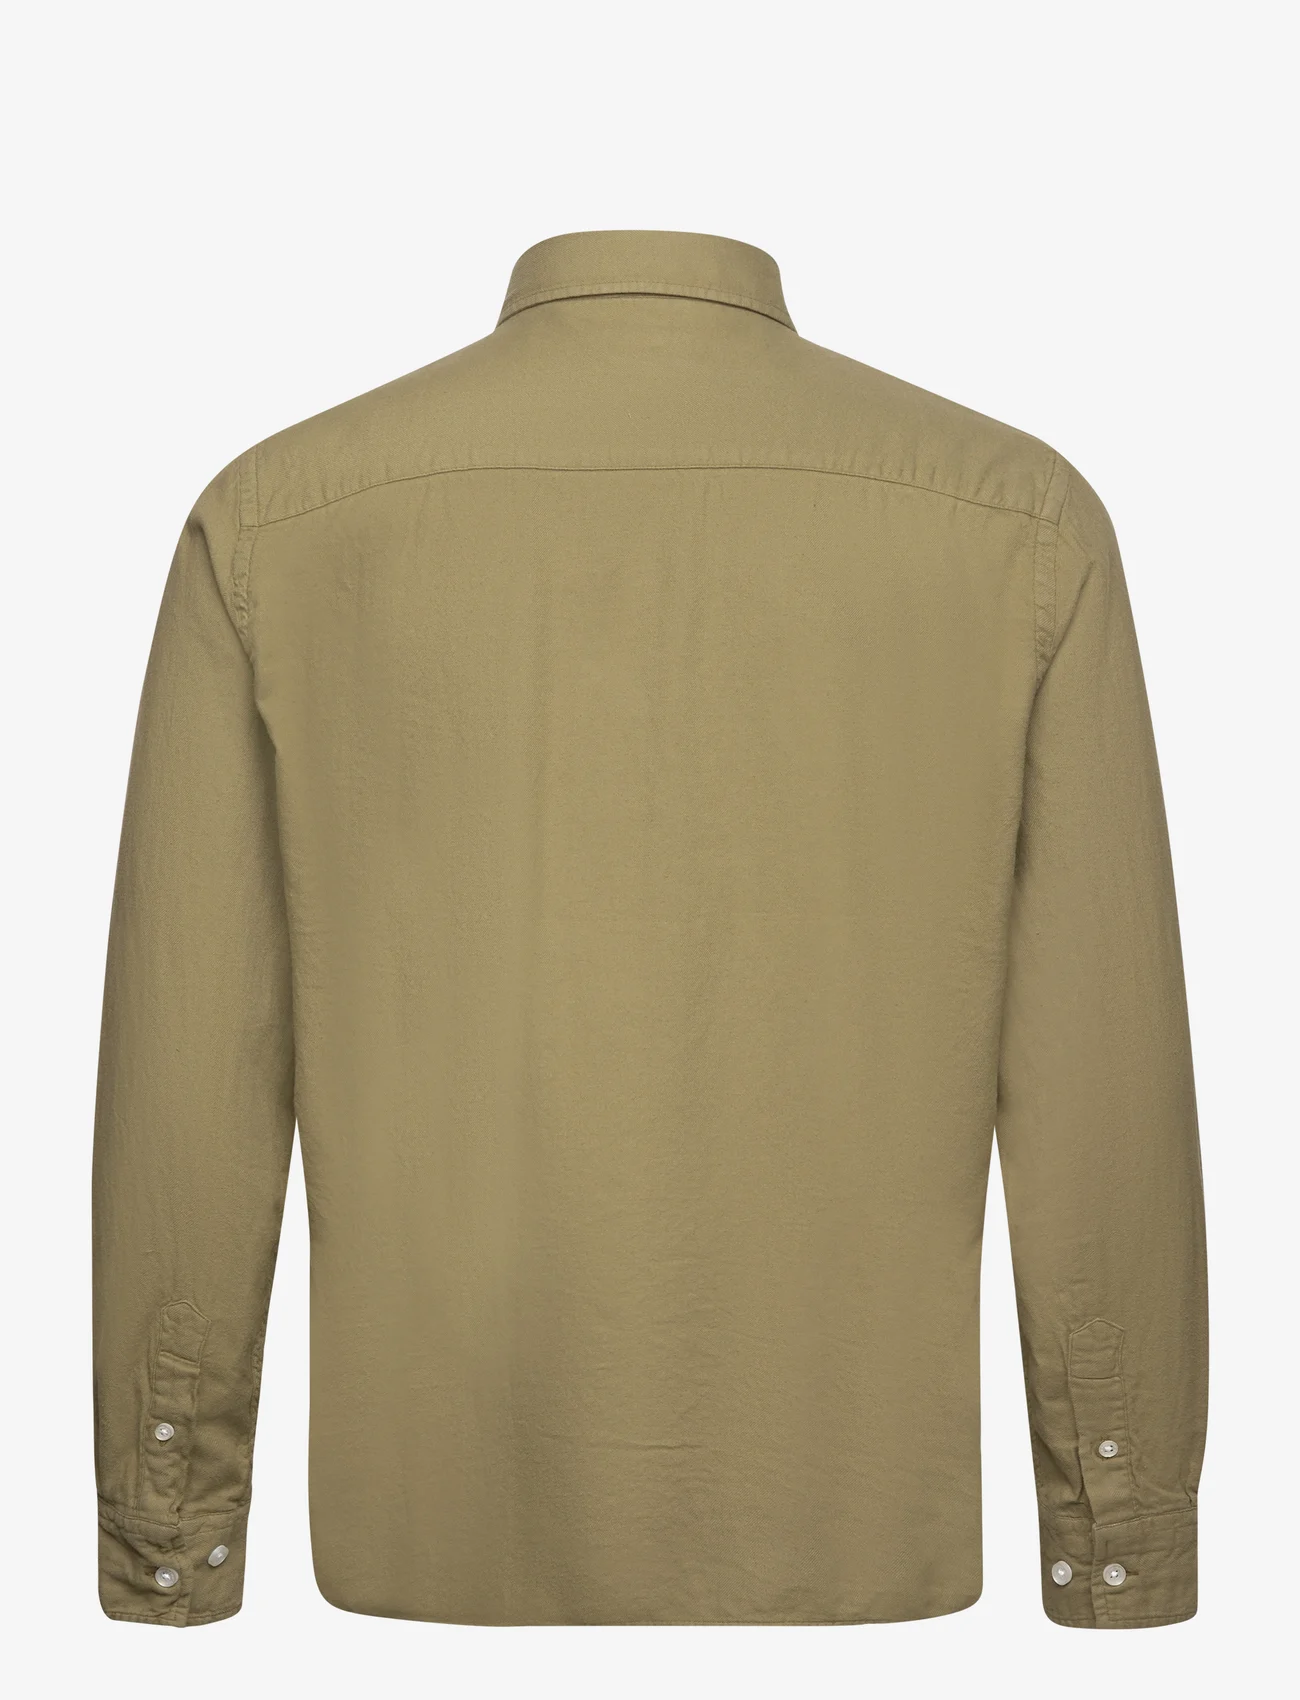 Armor Lux - Shirt Héritage - basic skjorter - oliva - 1